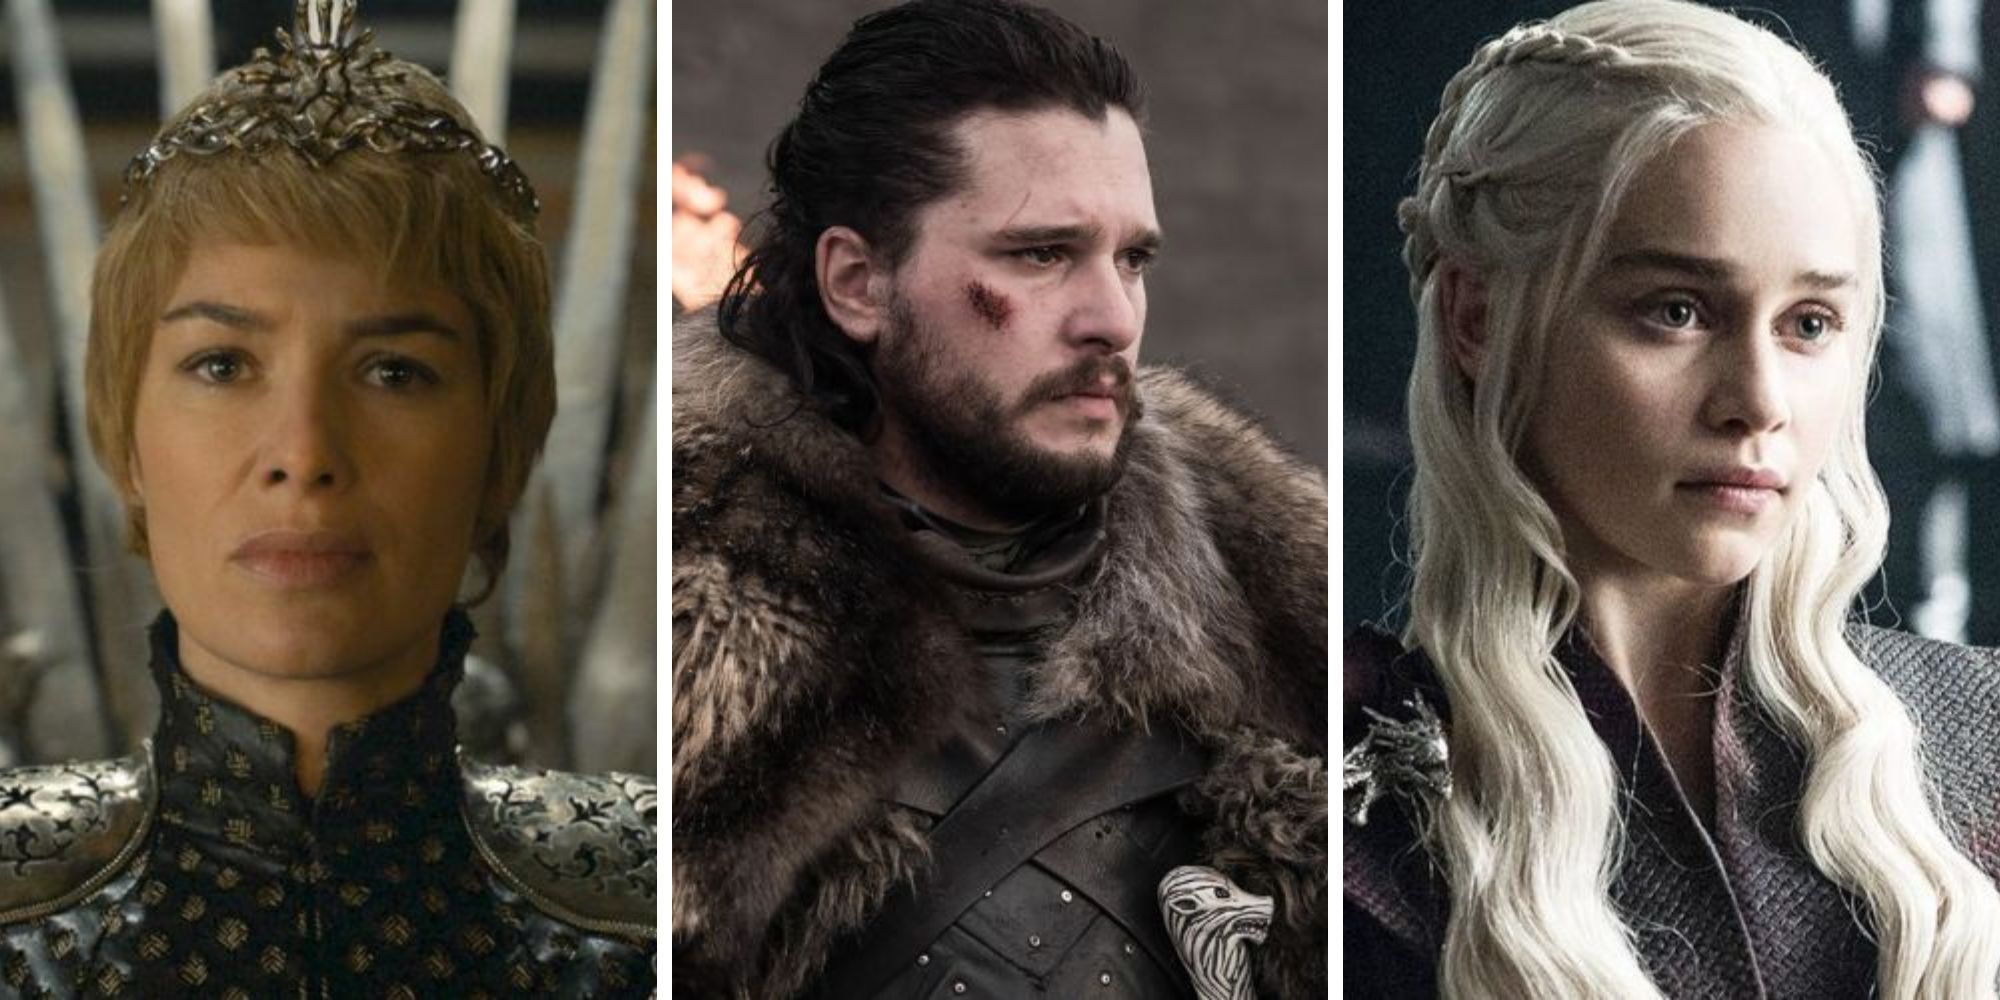 GOT Featured Image featuring Cersei Lannister, Jon Snow, and Daenerys Targaryen